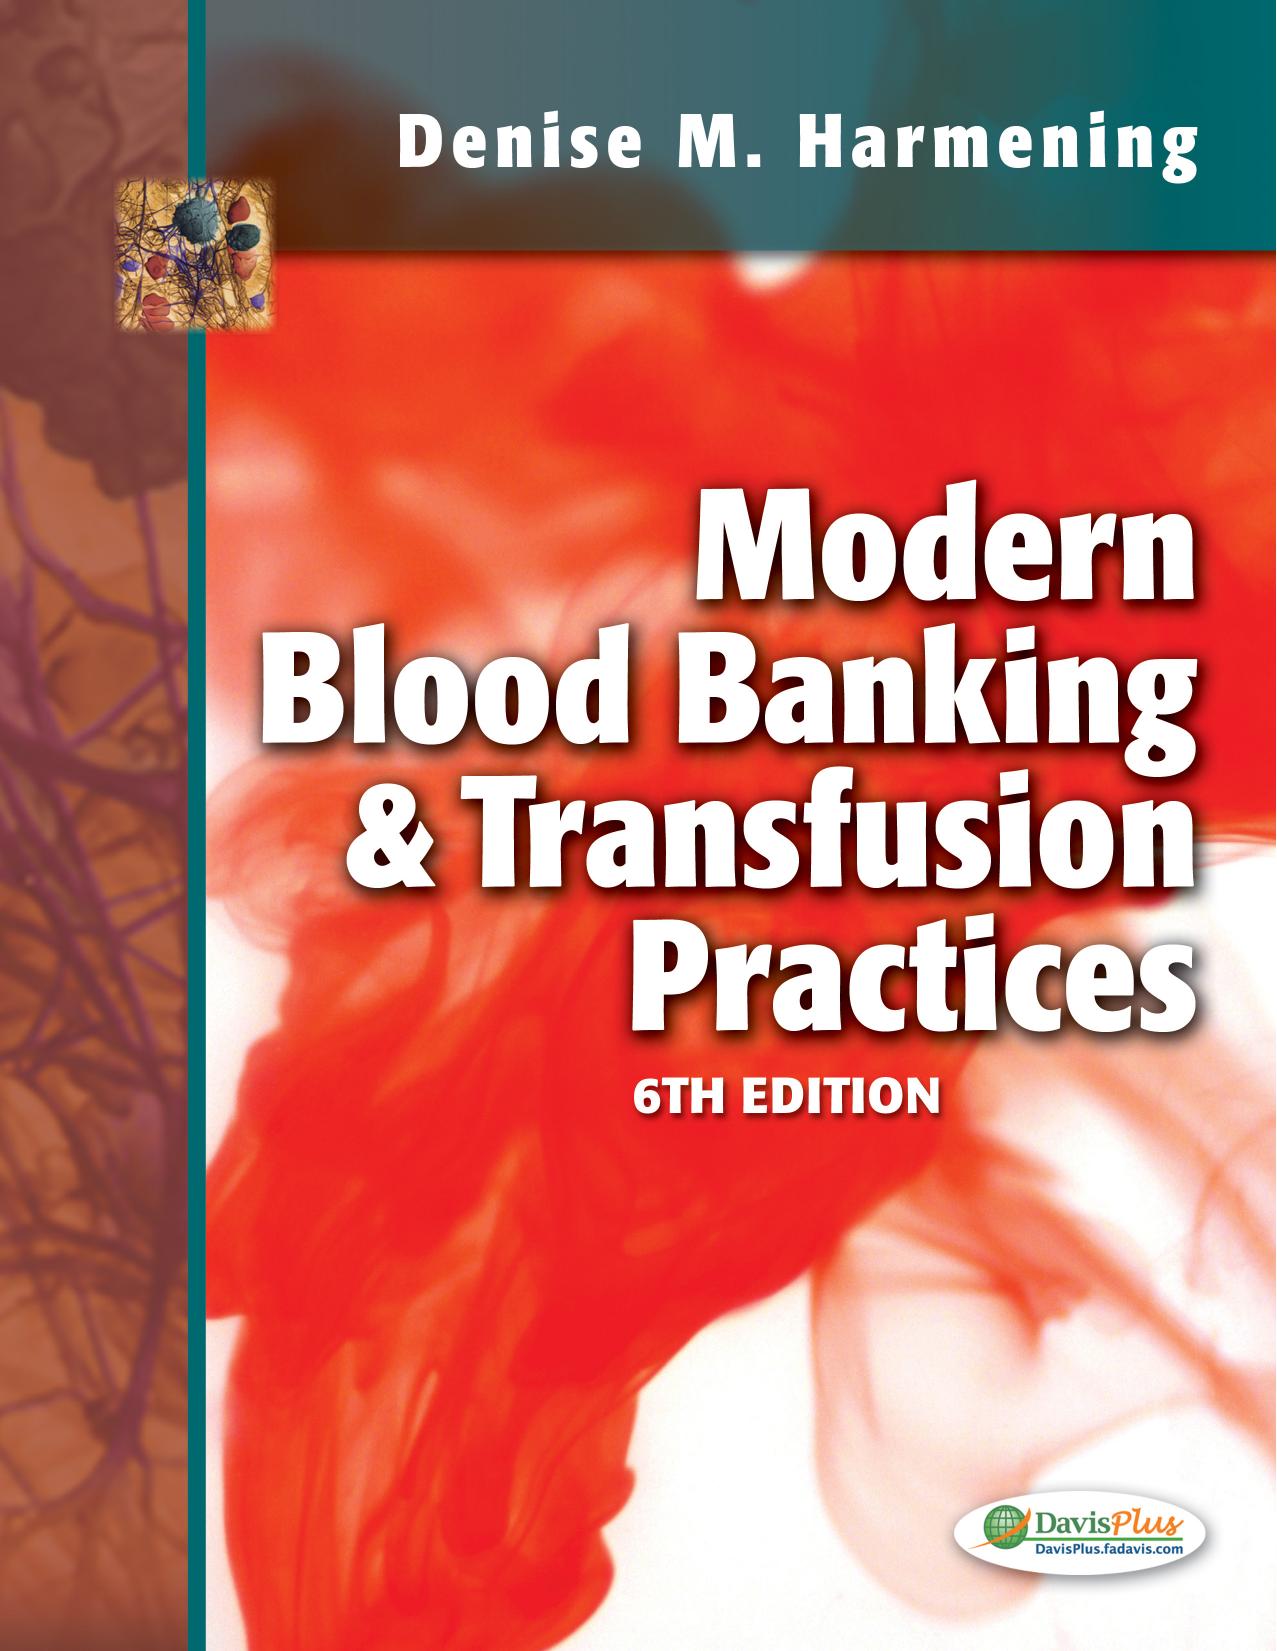 Modern Blood Banking & Transfusion Practices ed6 Harmening 6th ed. 2012.pdf